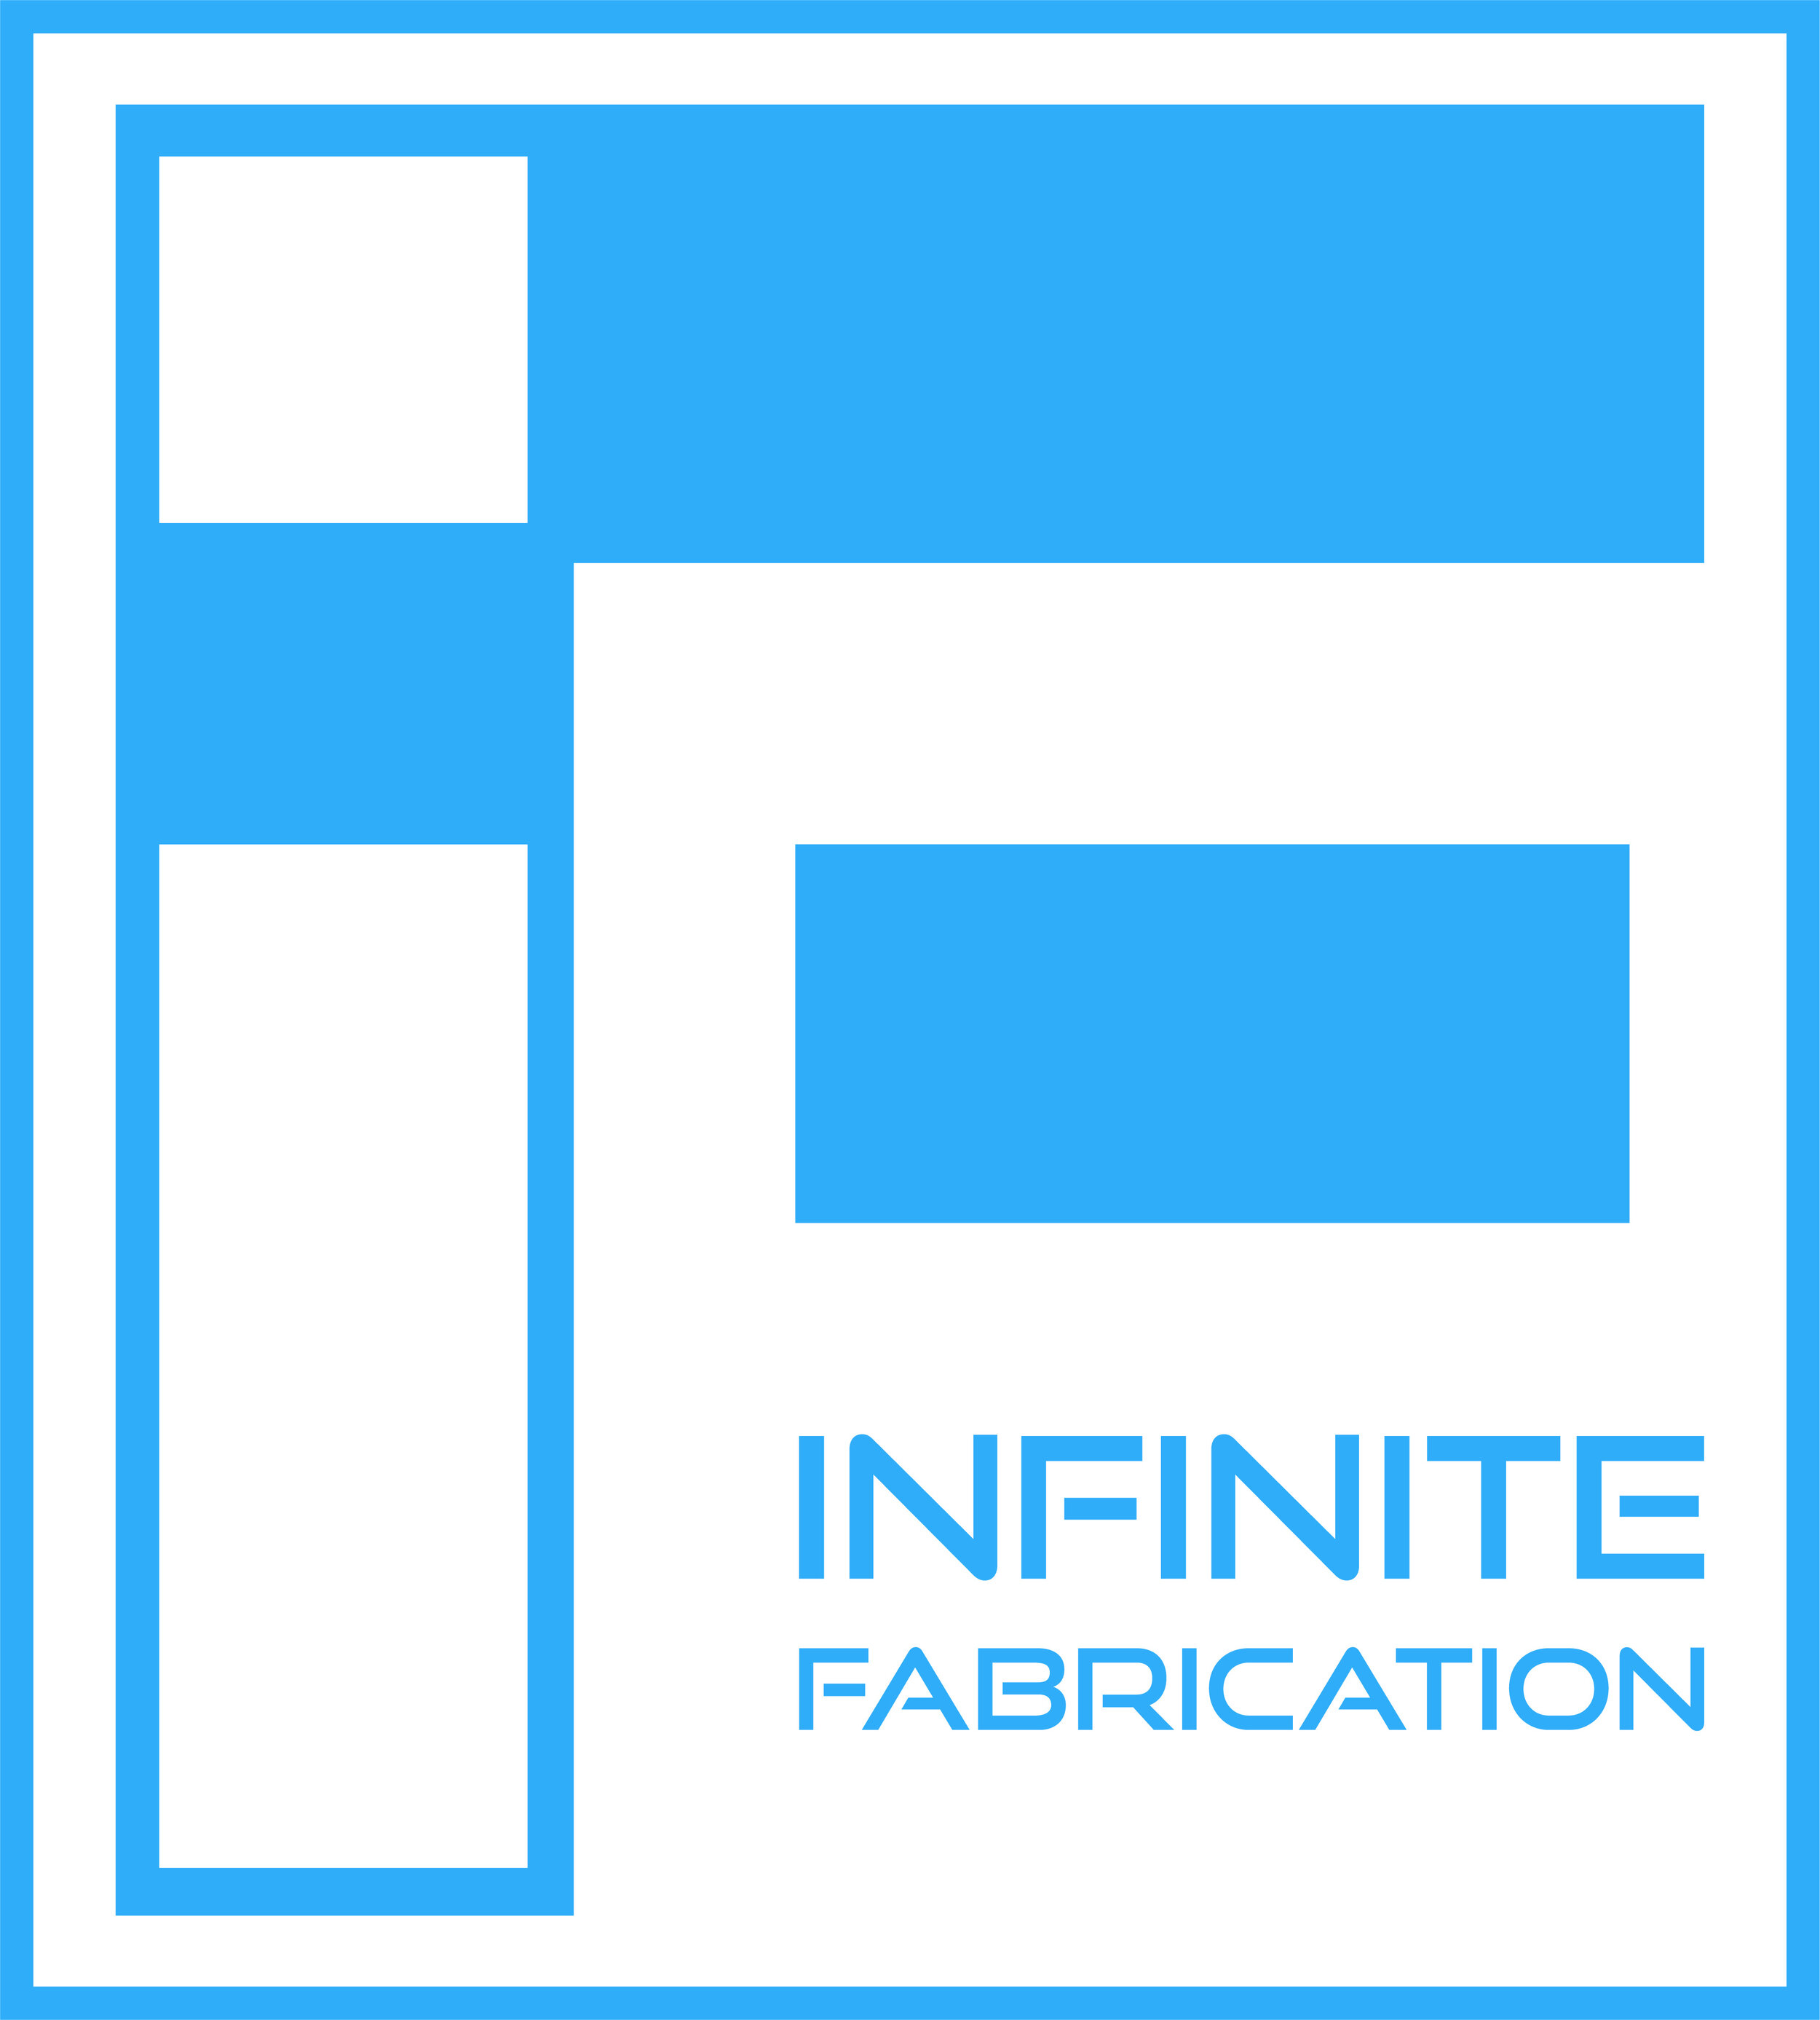 Infinite Fabrication